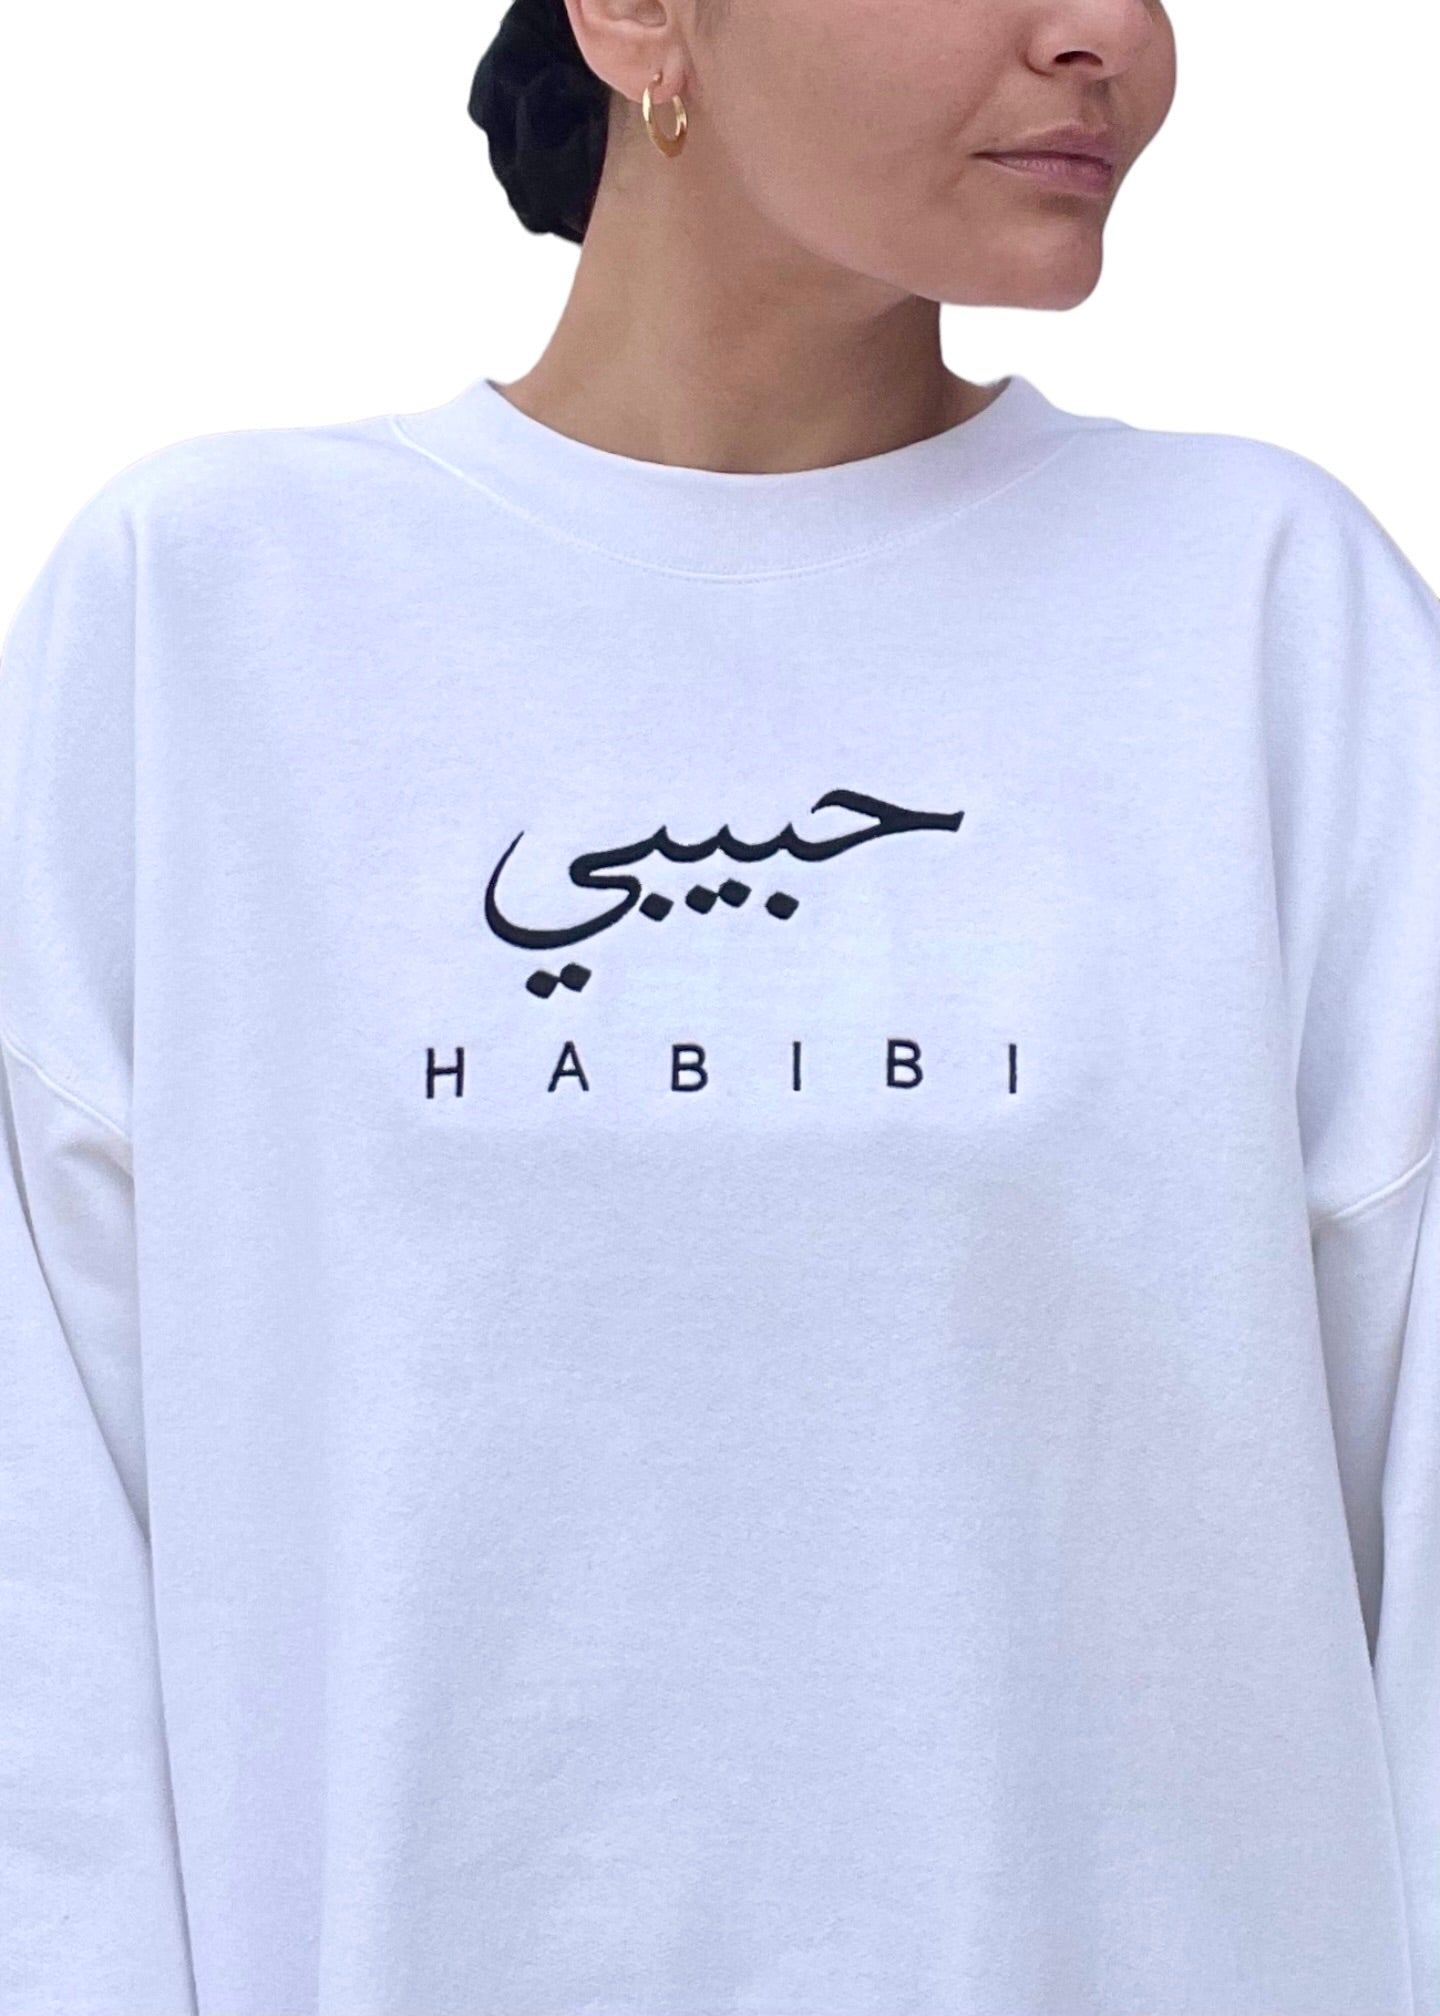 Habibi - My Love for him(Arabic) Art Print by Project Seen | Arabic art,  Shirt logo design, Art prints